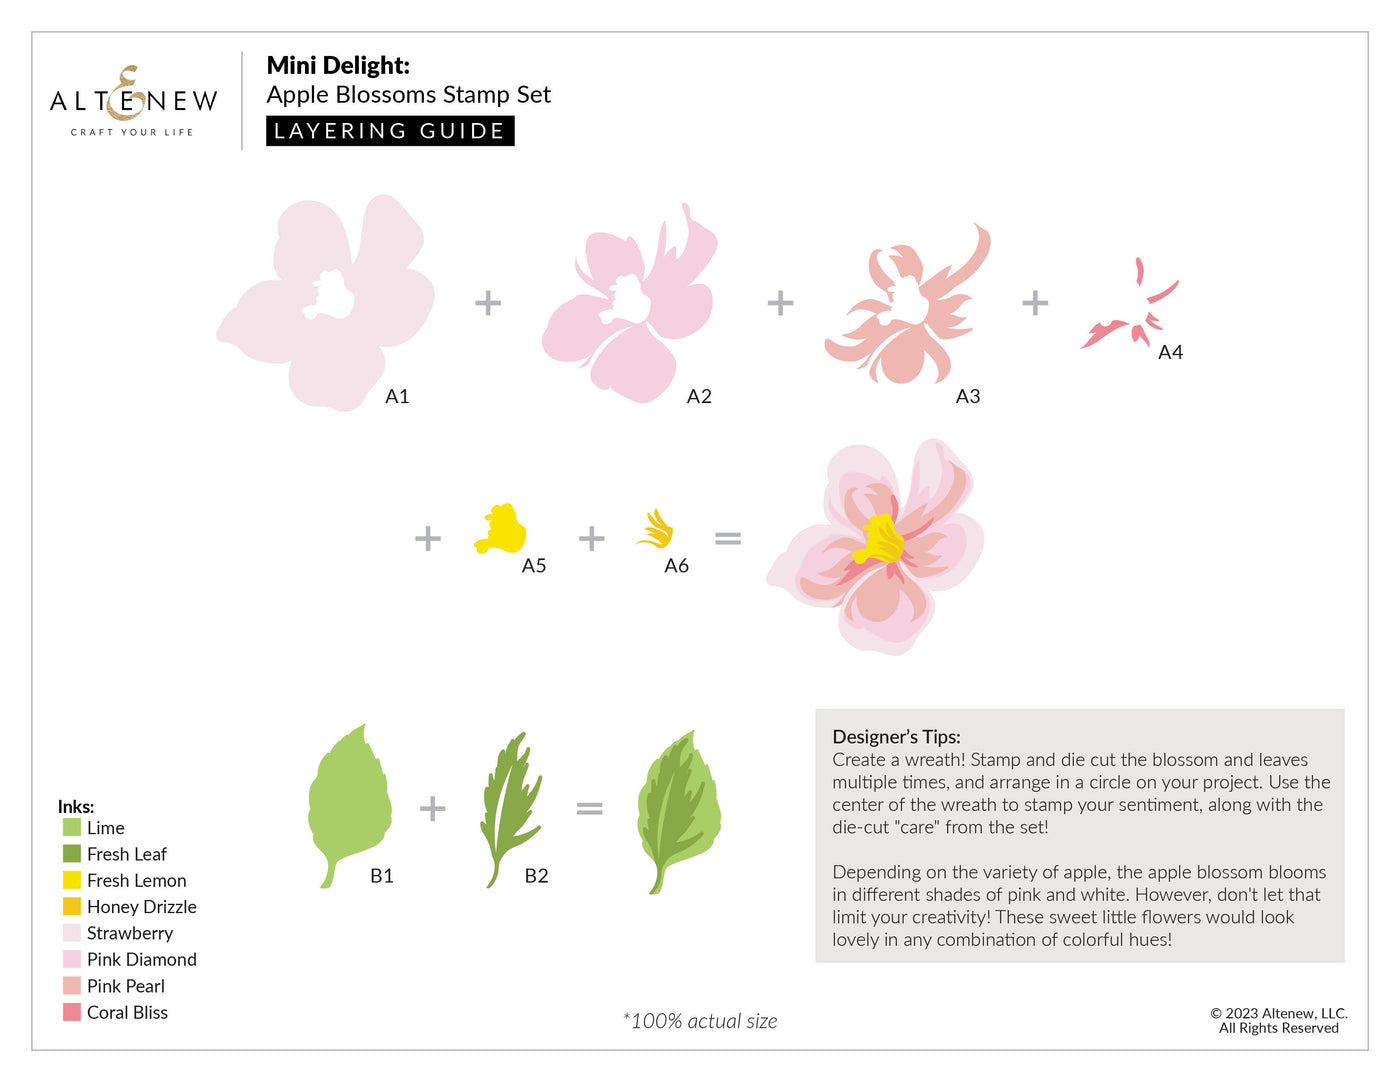 Mini Delight Mini Delight: Apple Blossoms Stamp & Die Set